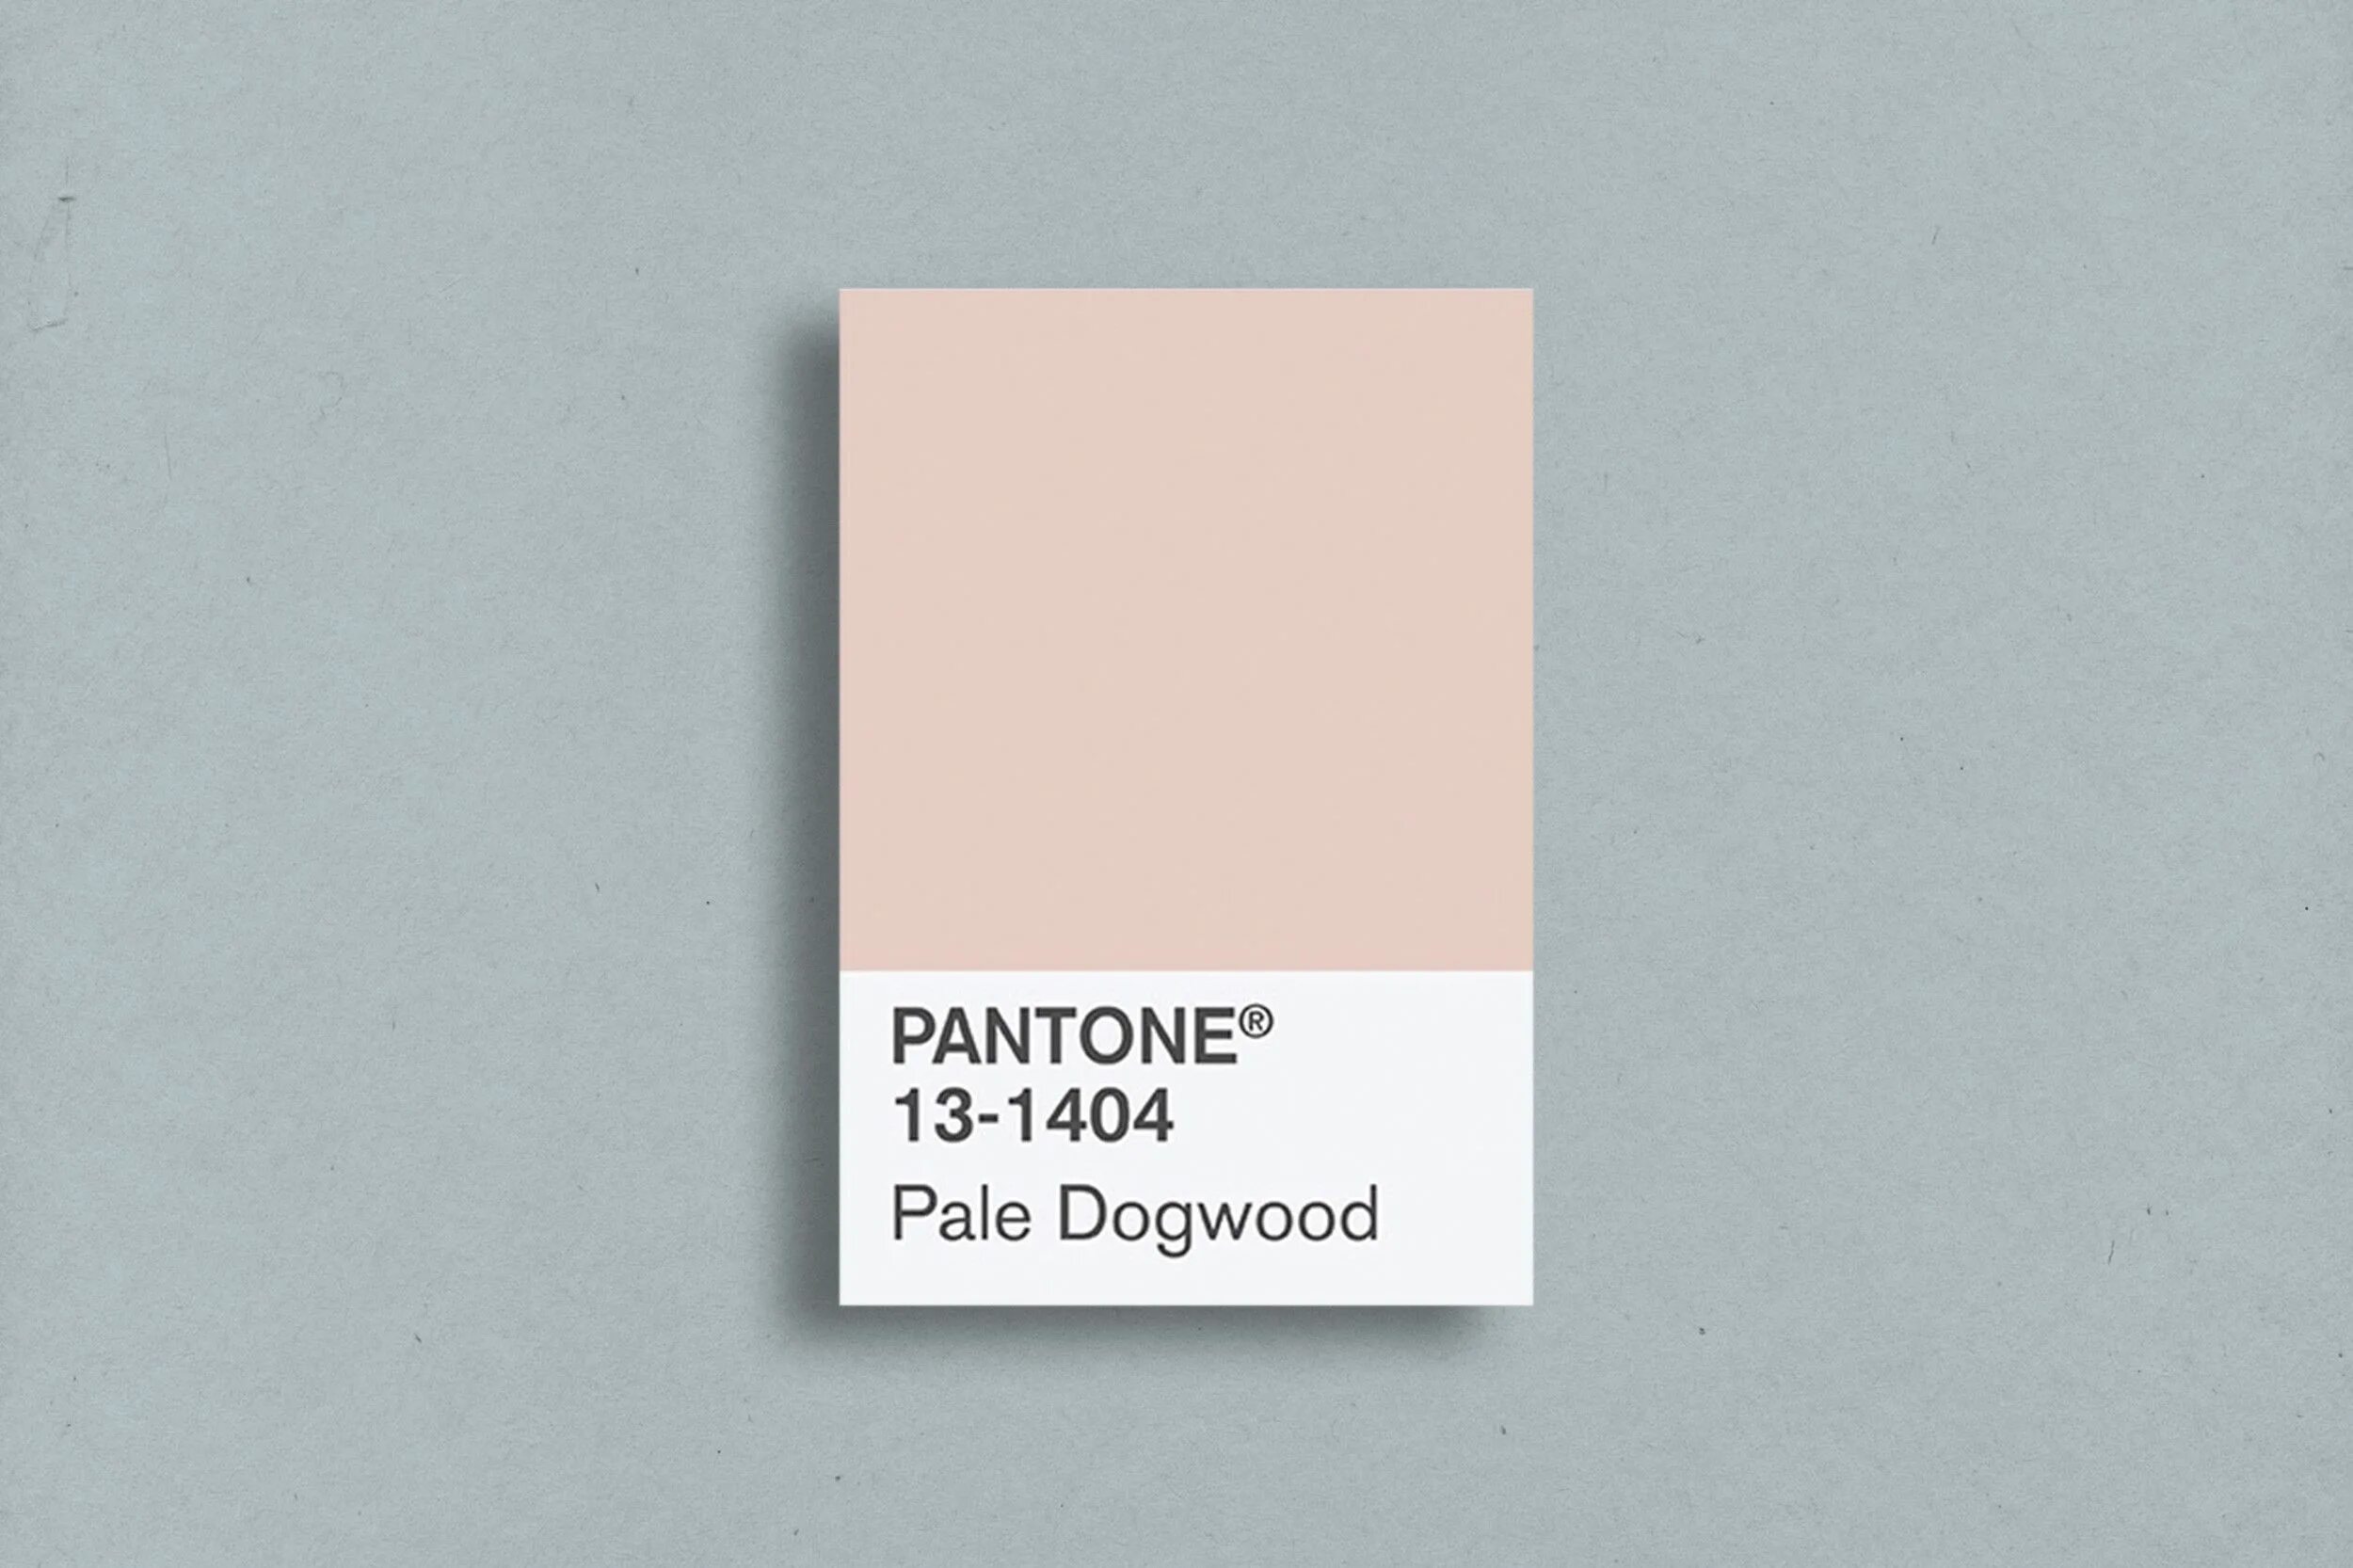 Пантон 13-1404. Цвет пантон 13-1404. Pantone 13-1404 pale Dogwood. Персиковый цвет пантон. Pantone mushroom